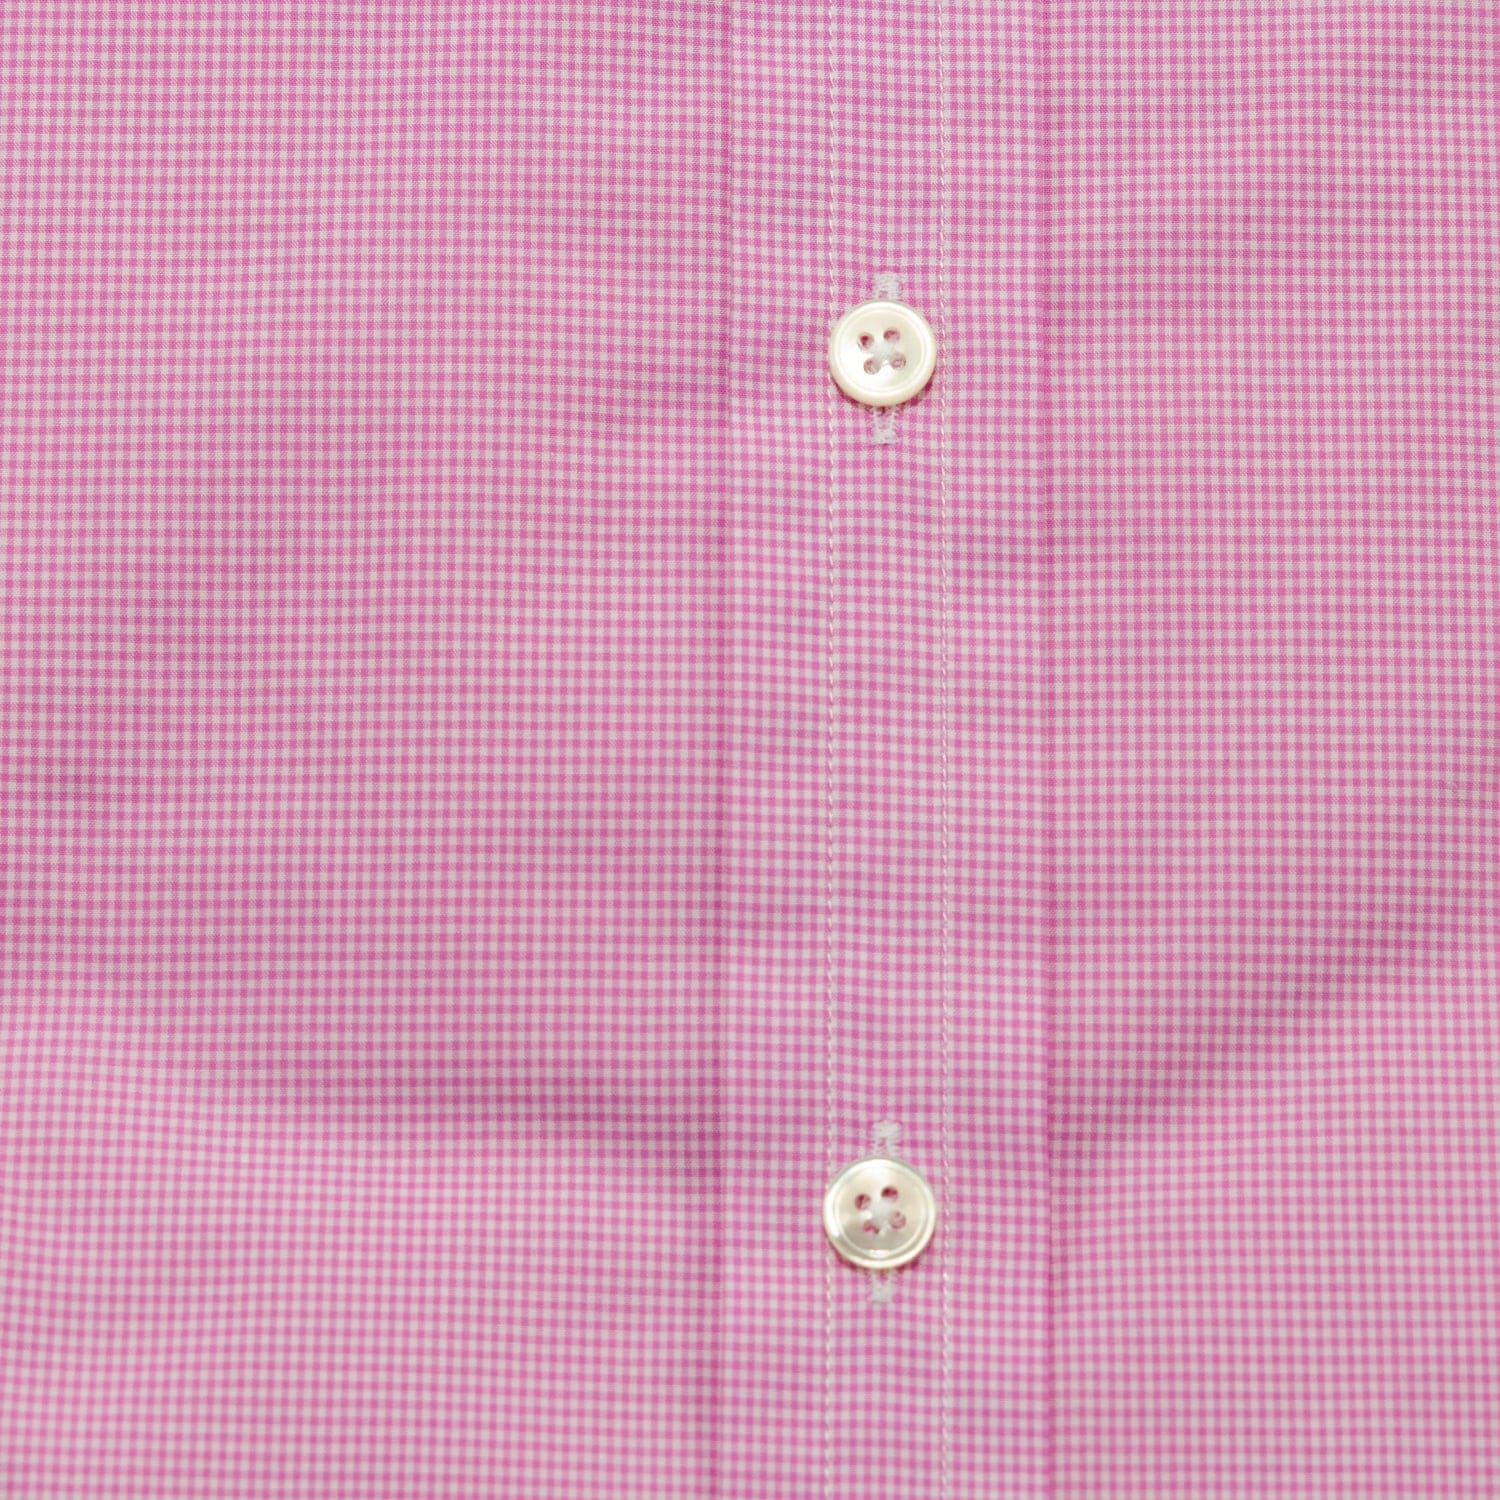 Contemporary Fit, Cutaway Collar, 2 Button Cuff Shirt in Lilac Micro Check